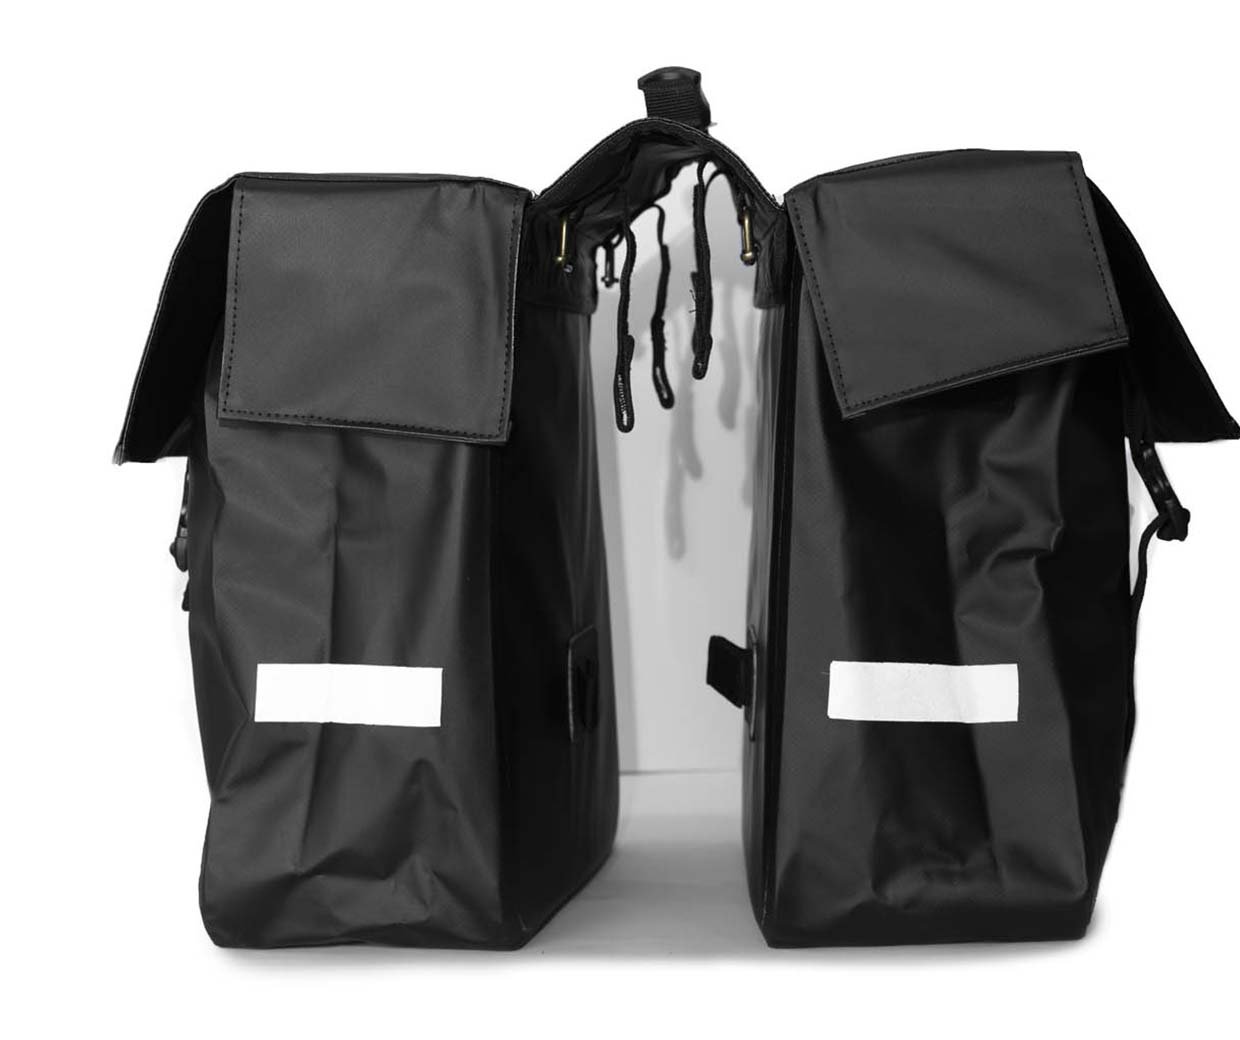 Waterproof double pannier bag